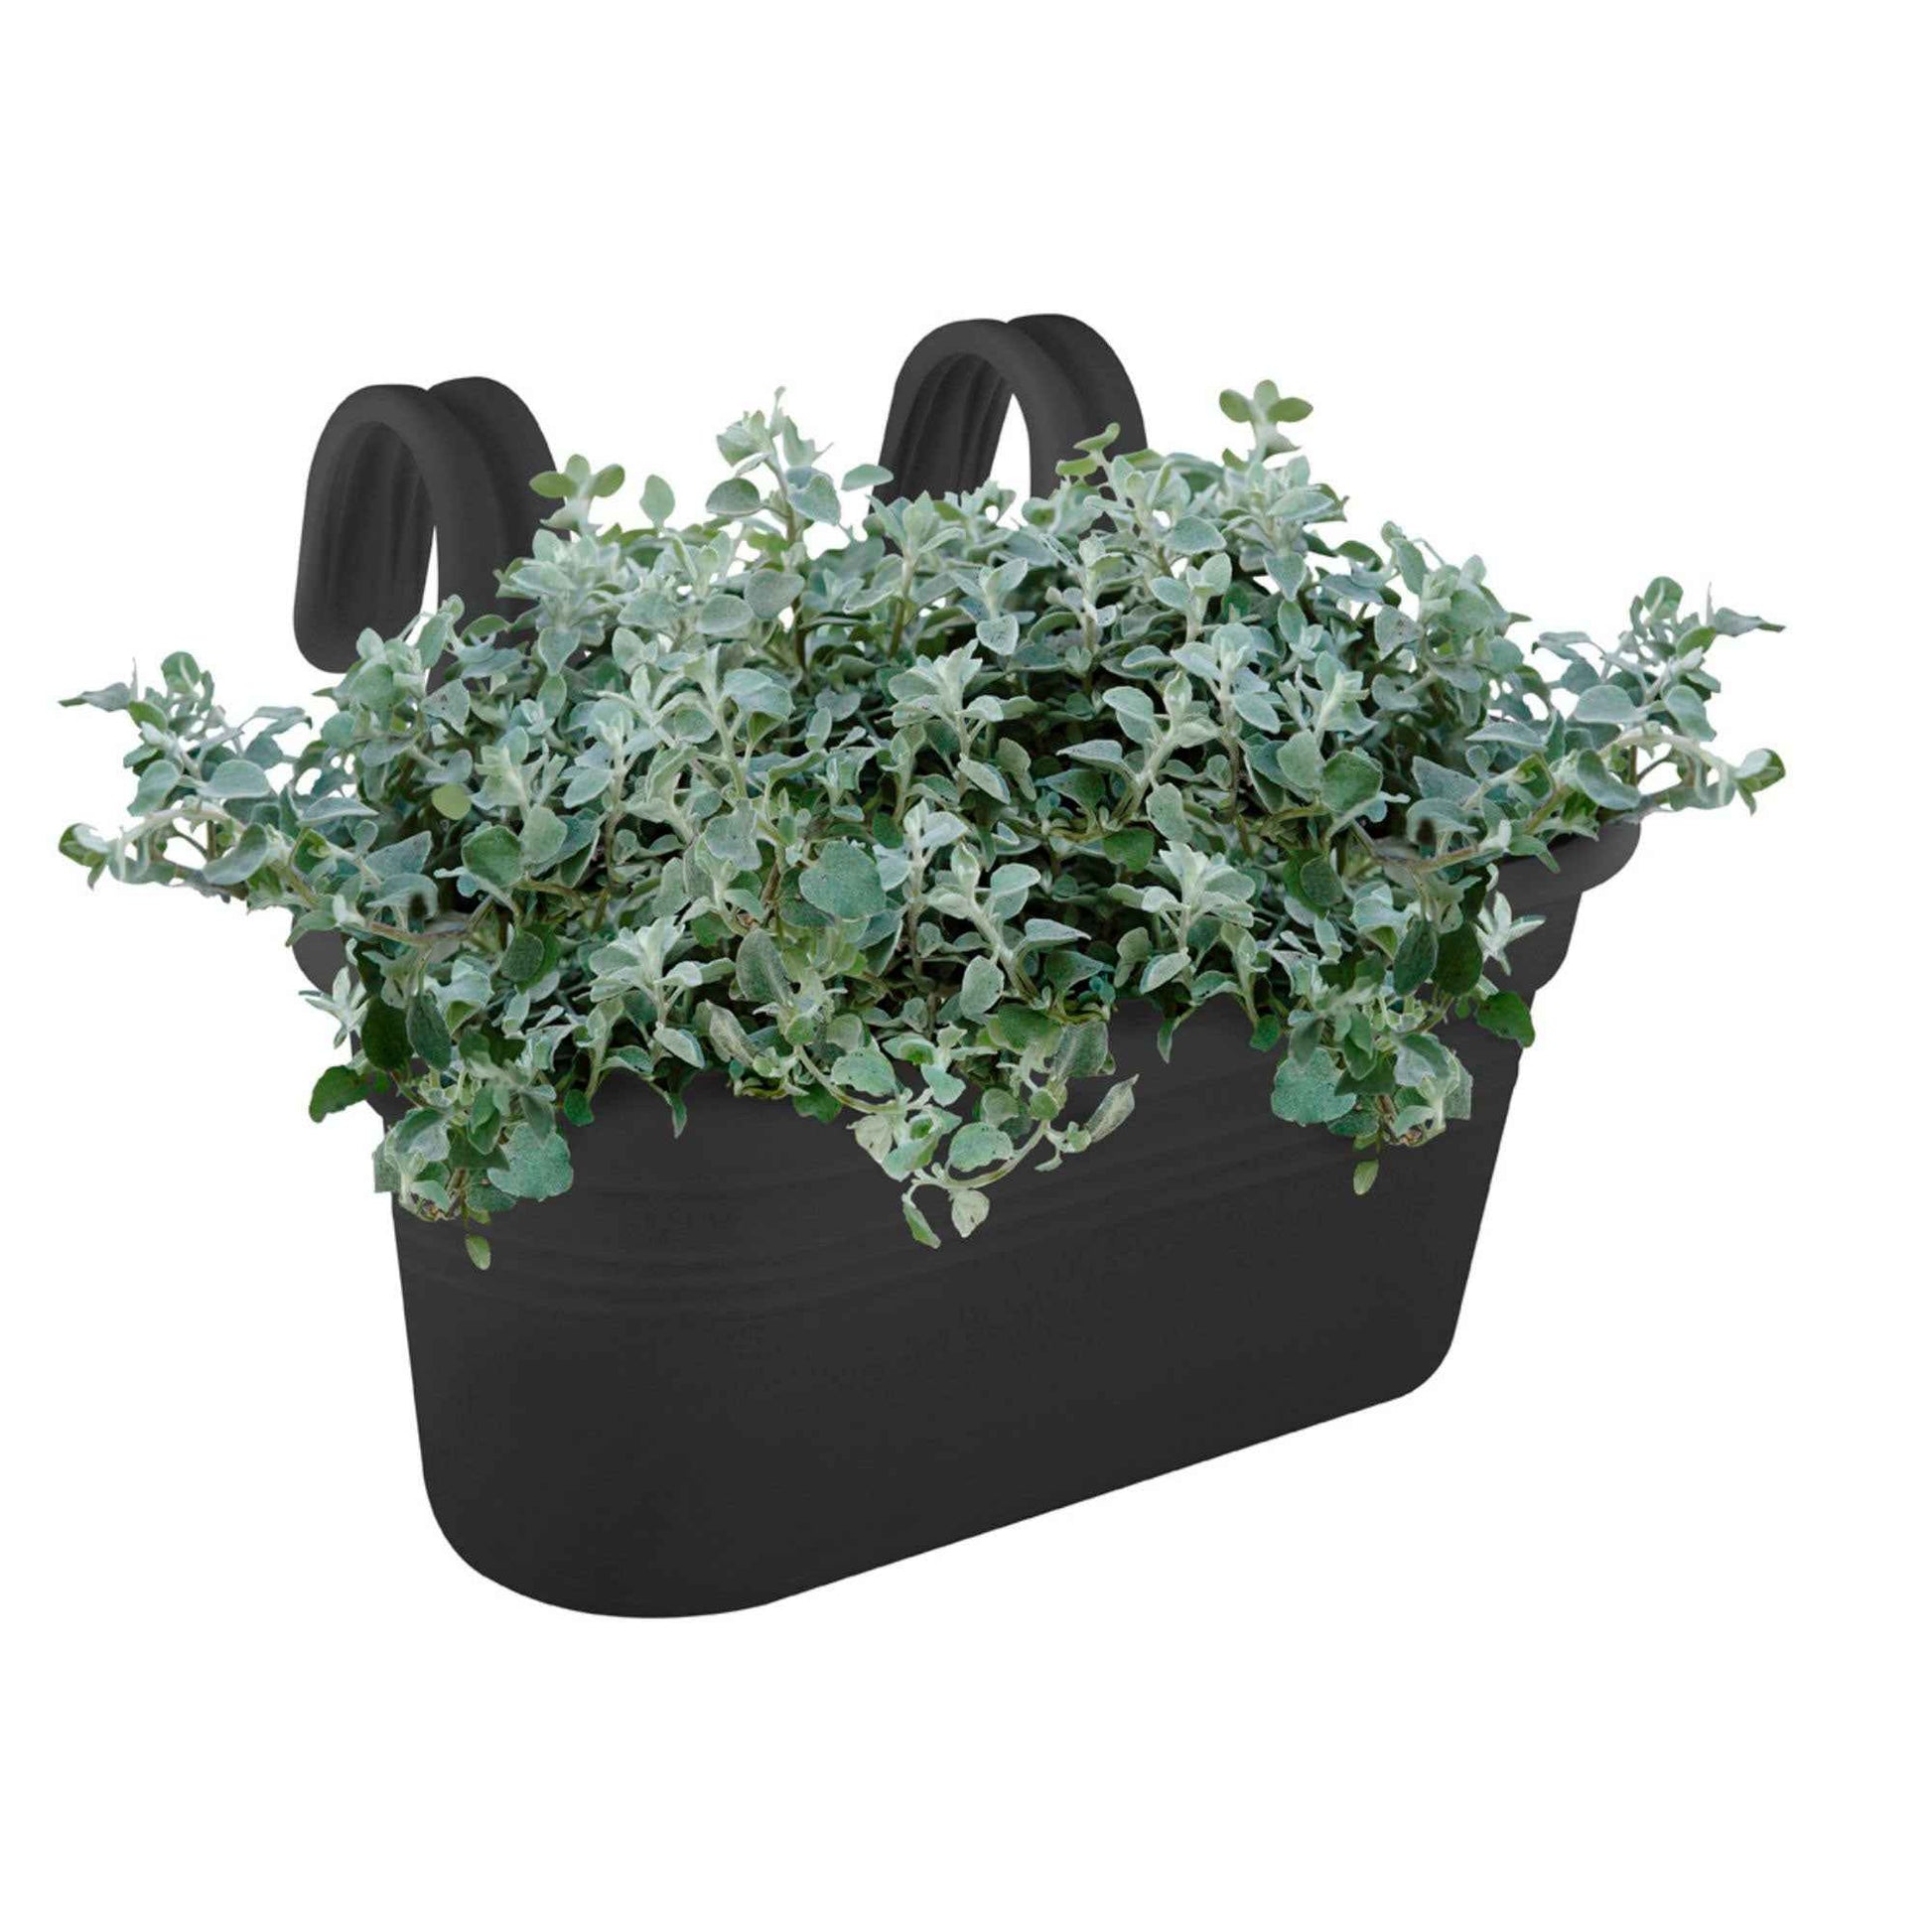 Elho jardinière Green basics easy hanger large ovale noir - Grands pots de fleurs